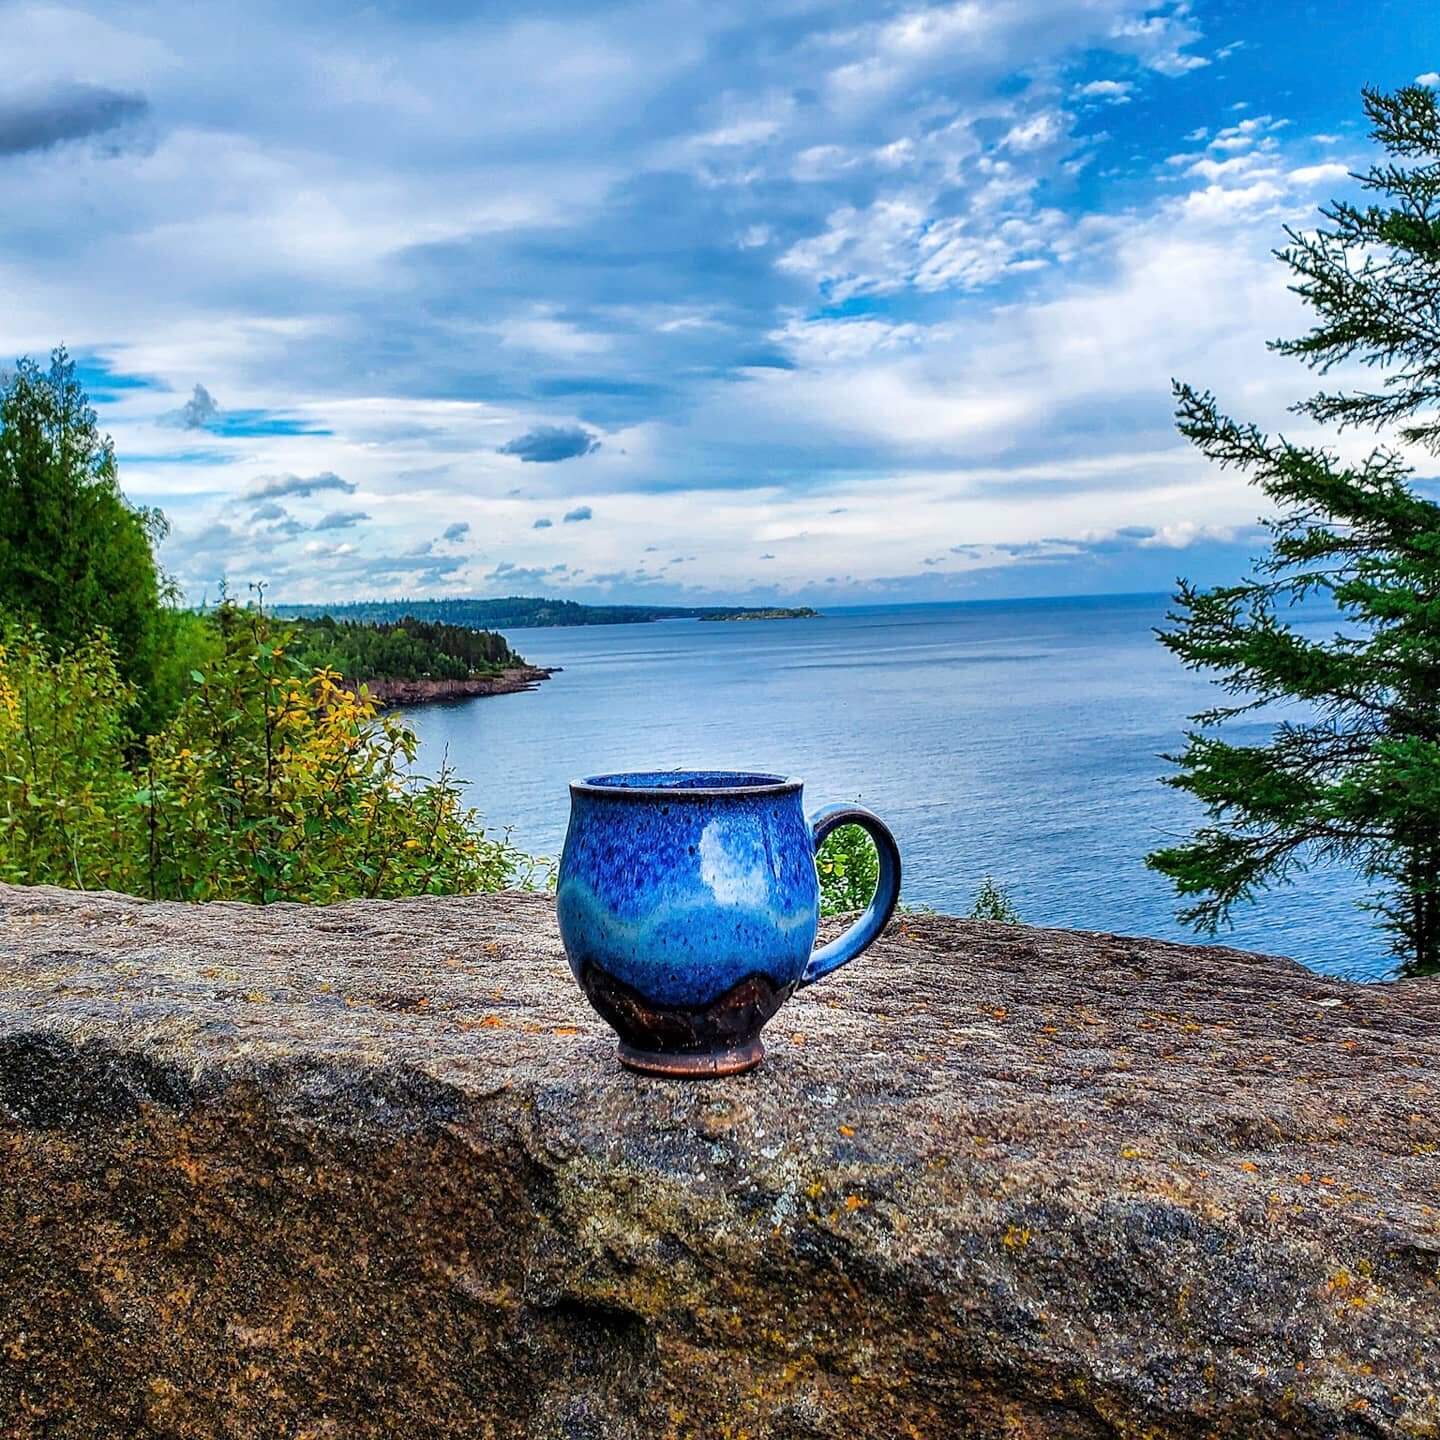 A mug just enjoying the view
.
.
.
.
.
#mug #coffeemug #water #prilaga #landscape #northshorephotographer #ceramiclife #naturephotography #landscapephotography #coffeetime #northshore #hikelife #trees #ceramics #coffeelife #hikersofinstagram #coffeec